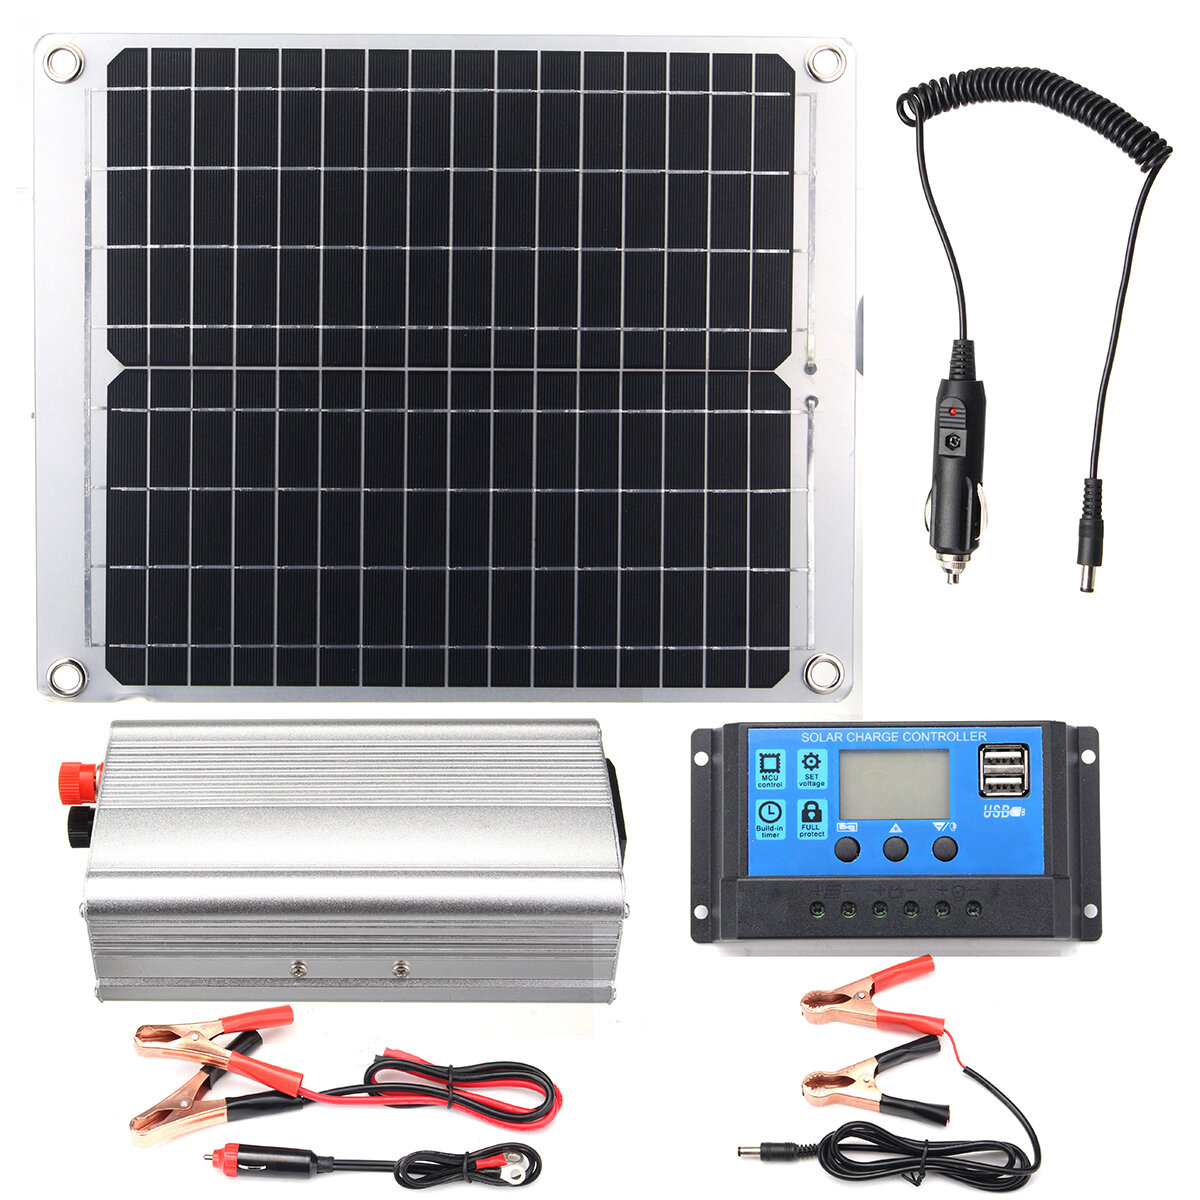 Efficient solar powered system 40w dual usb ports solar panel & 2000w